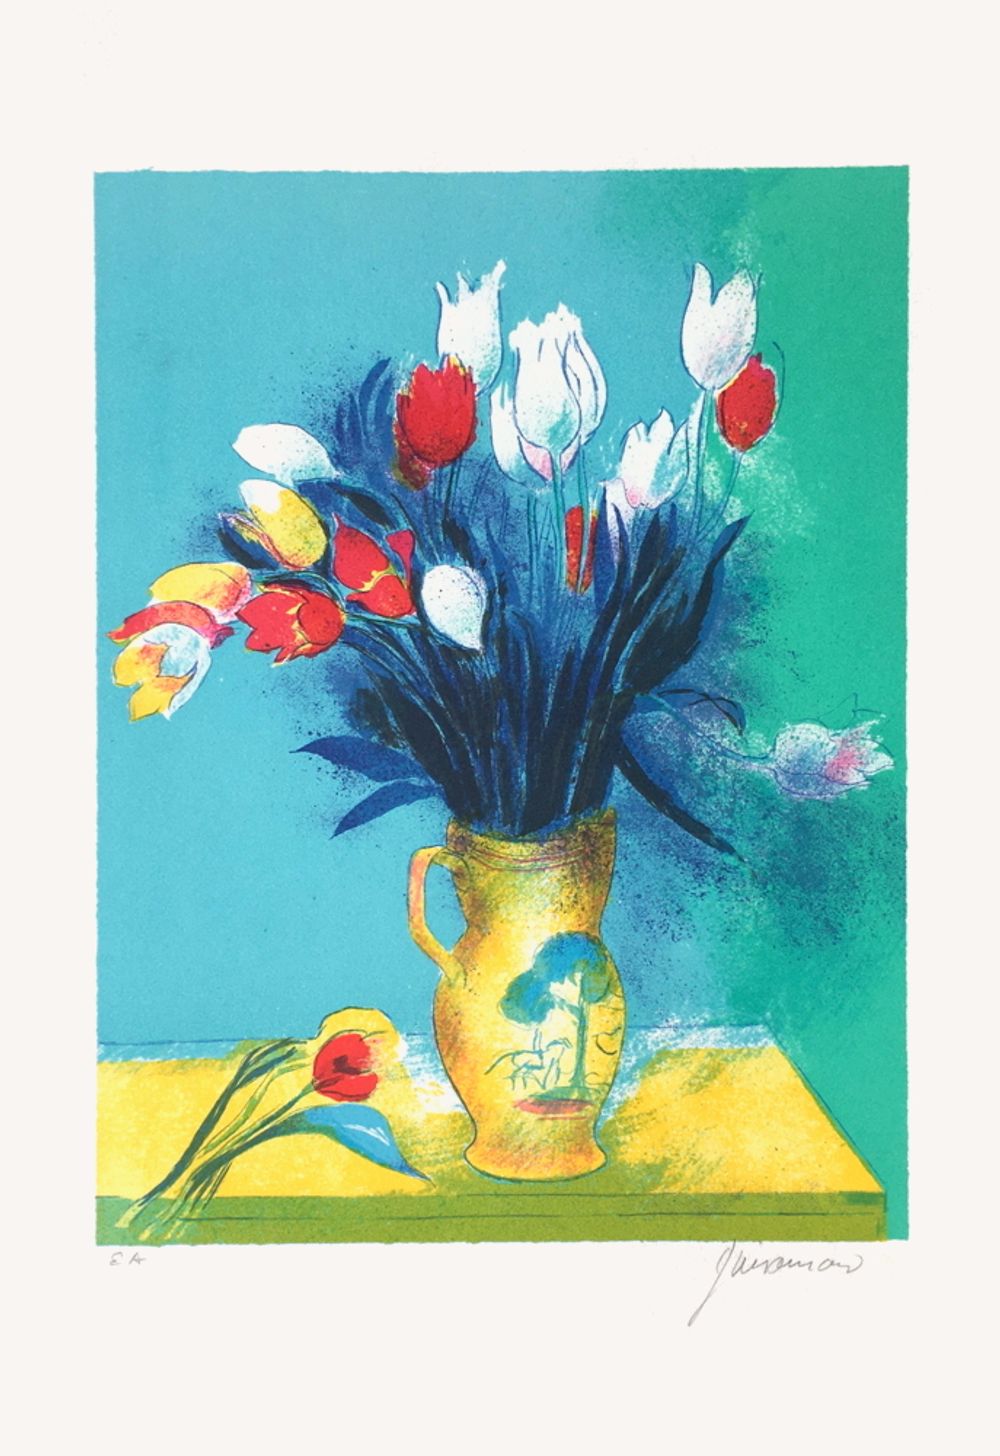 Bouquet de tulipes